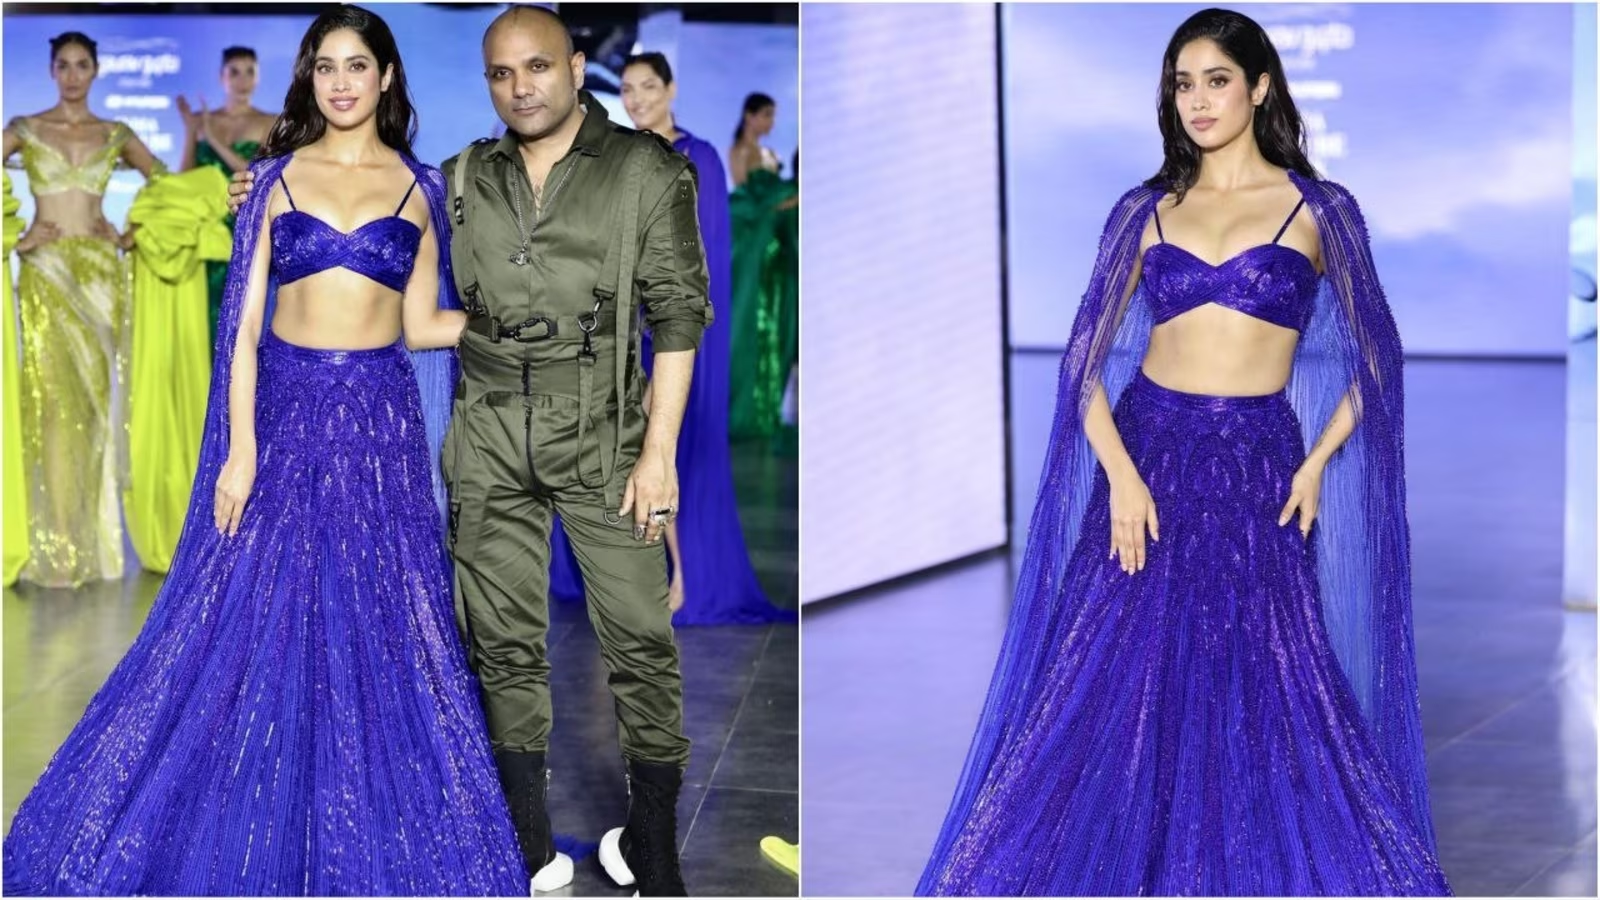 Janhvi Kapoor Looks Mesmerizing as the Showstopper in a Gorgeous Purple Lehenga at Gaurav Gupta's ICW Show